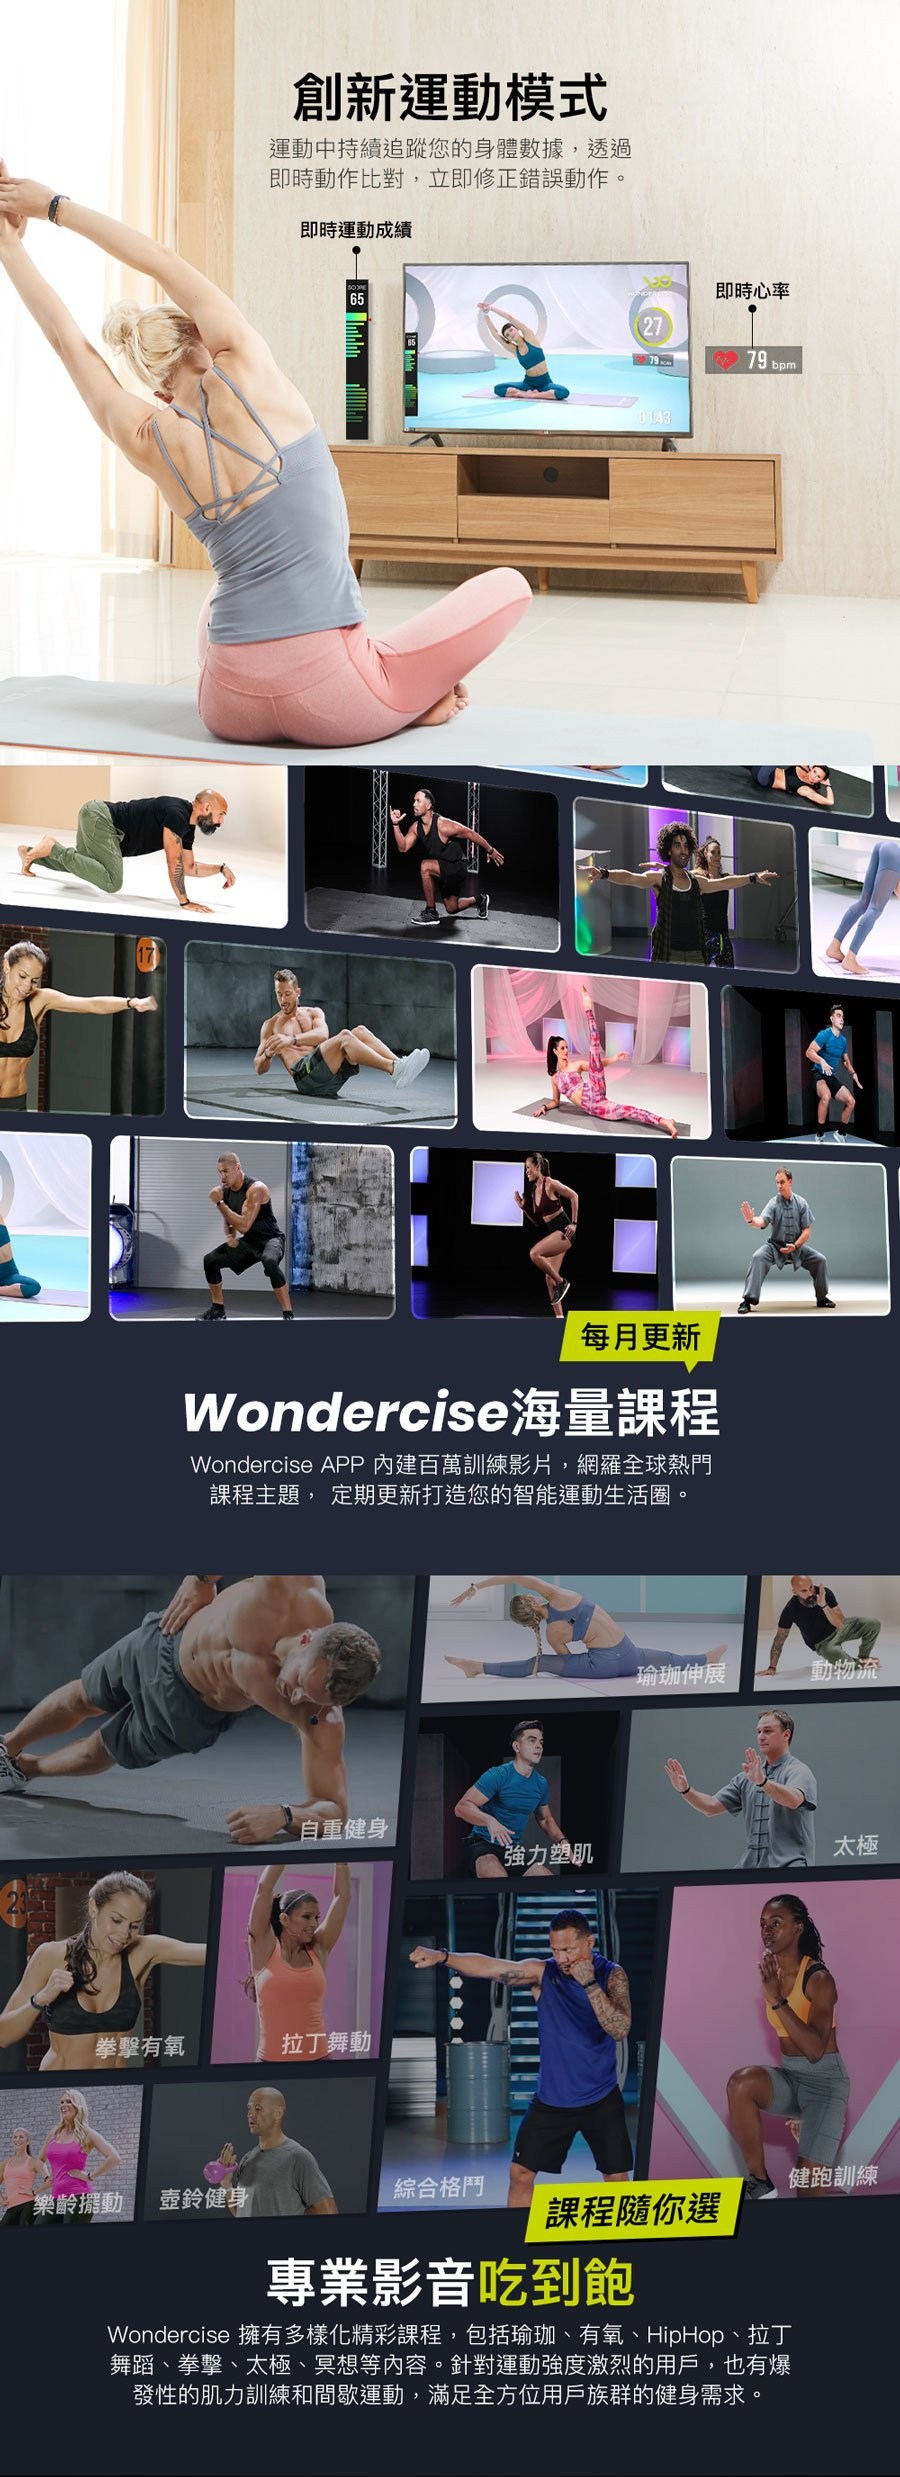 Wondercise 3. 0 05 - wondercise | 空中健身學院 | 官方購物網